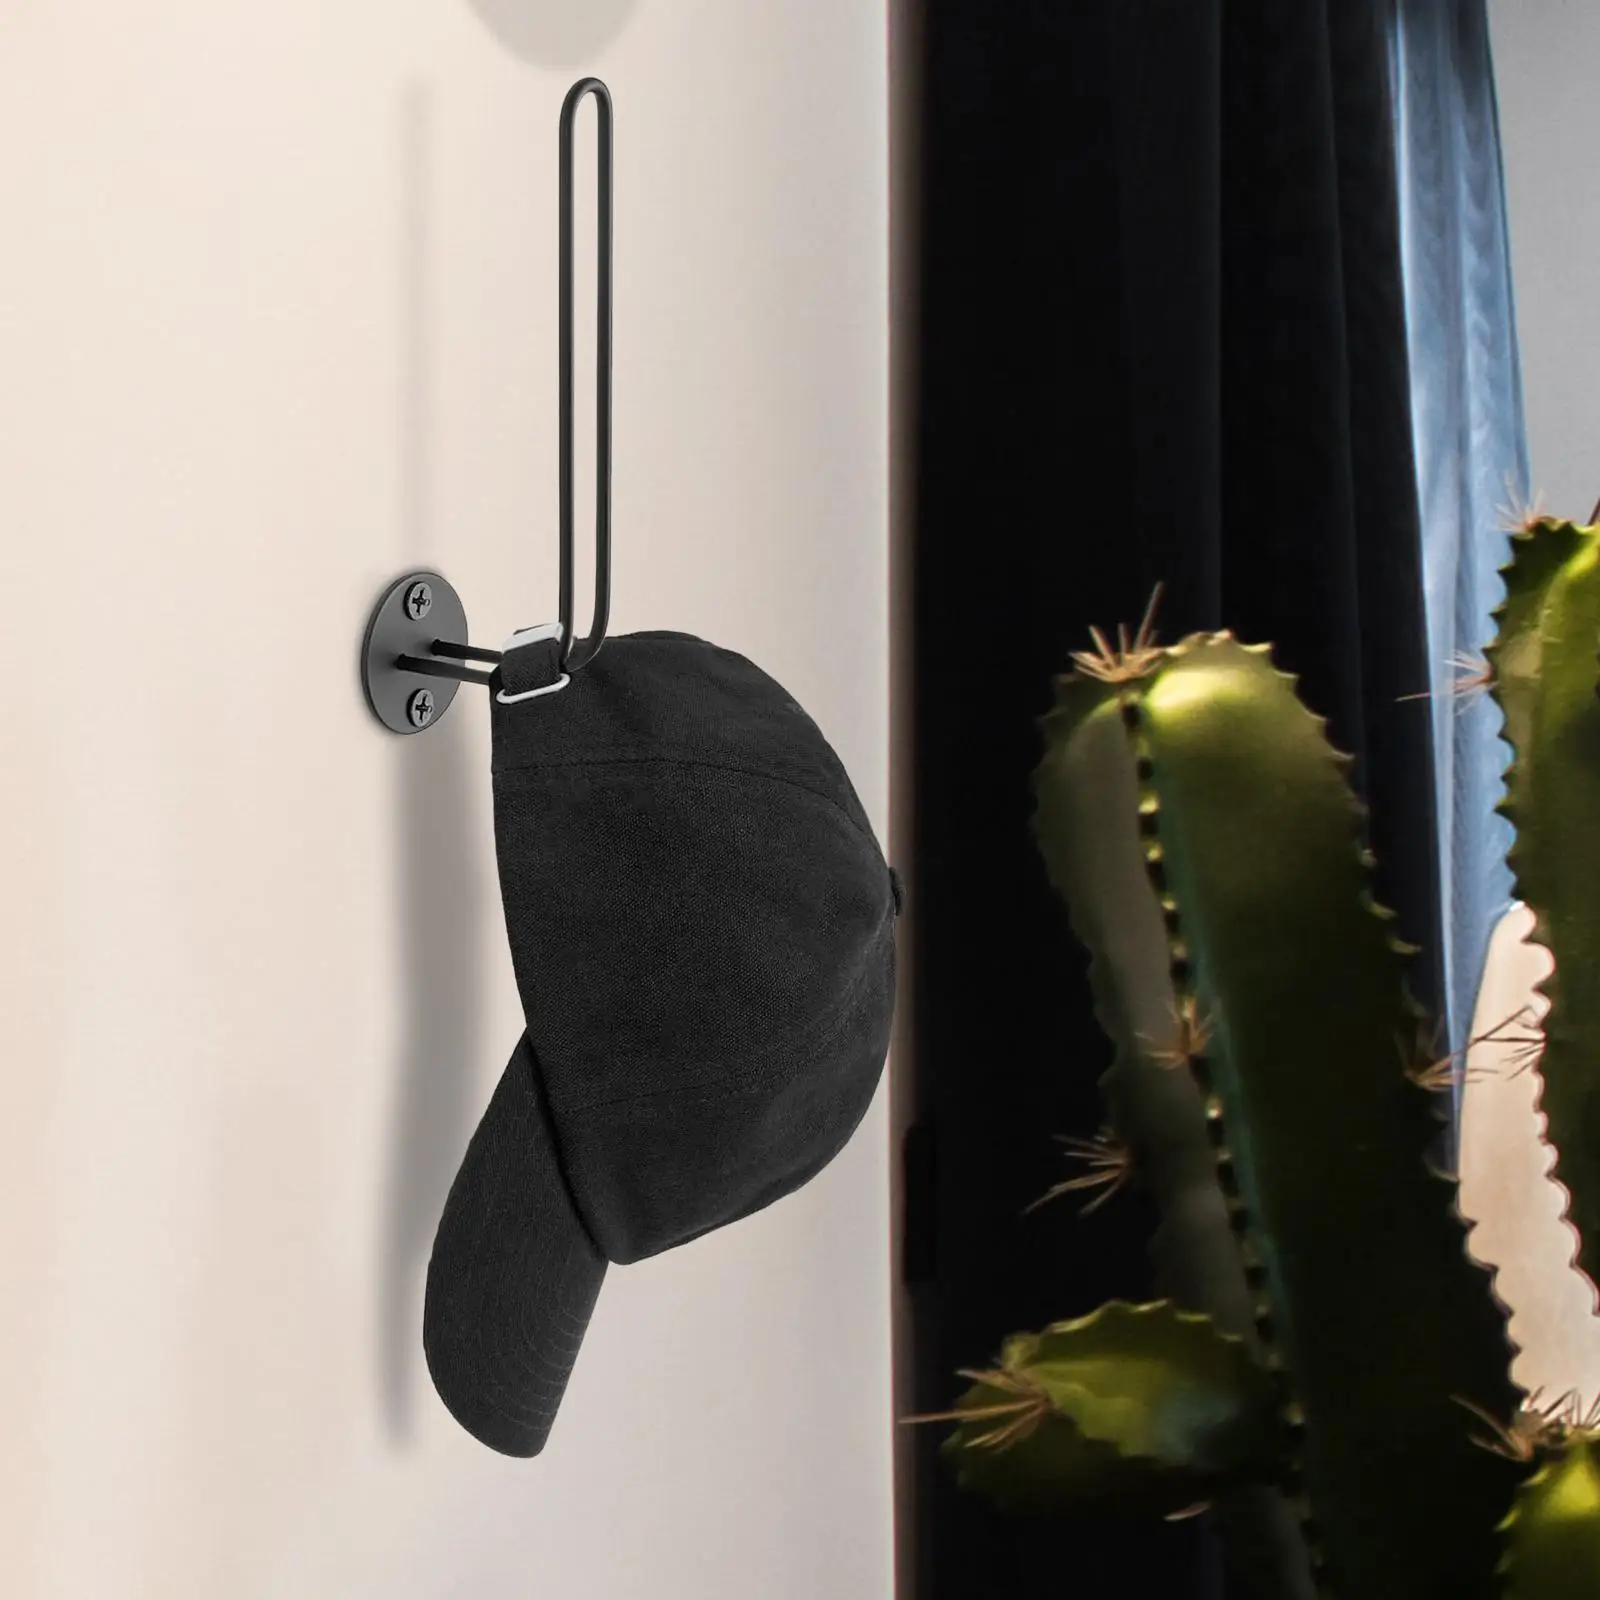 Baseball Cap Organizer Metal Wall Mounted Hook Black Easy Installation Modern for Closet Living Room Office Home Wall Decor